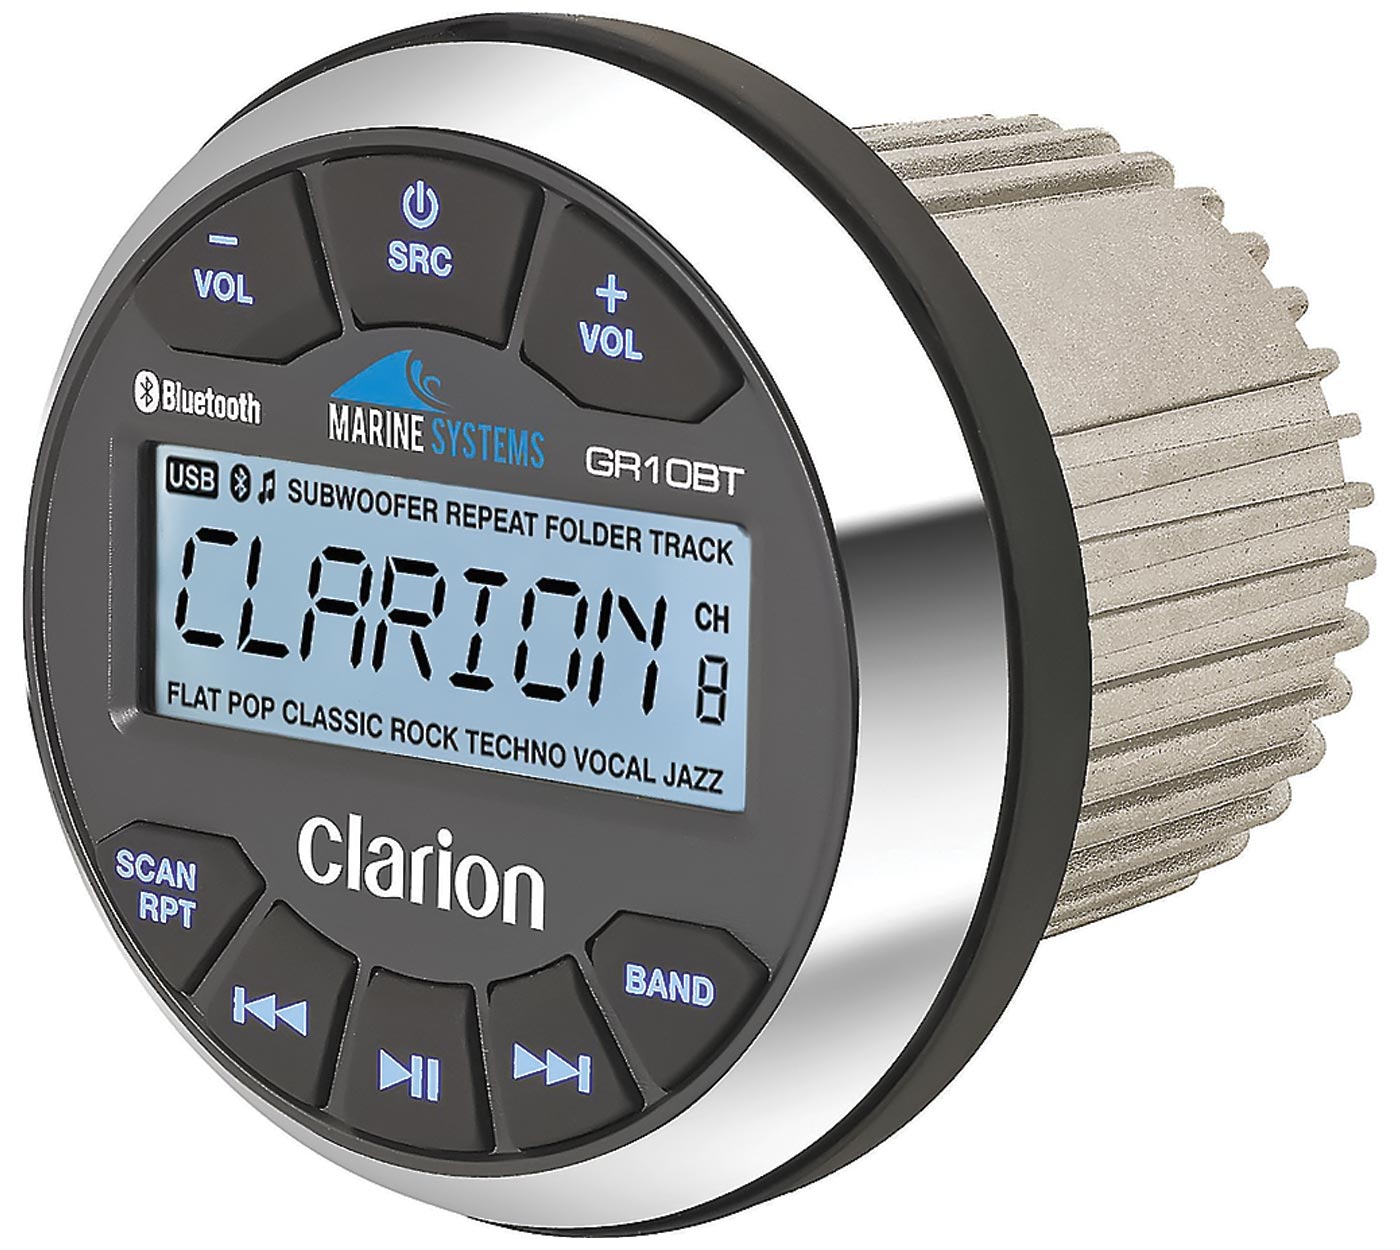 The Clarion GR10BT marine digital media receiver